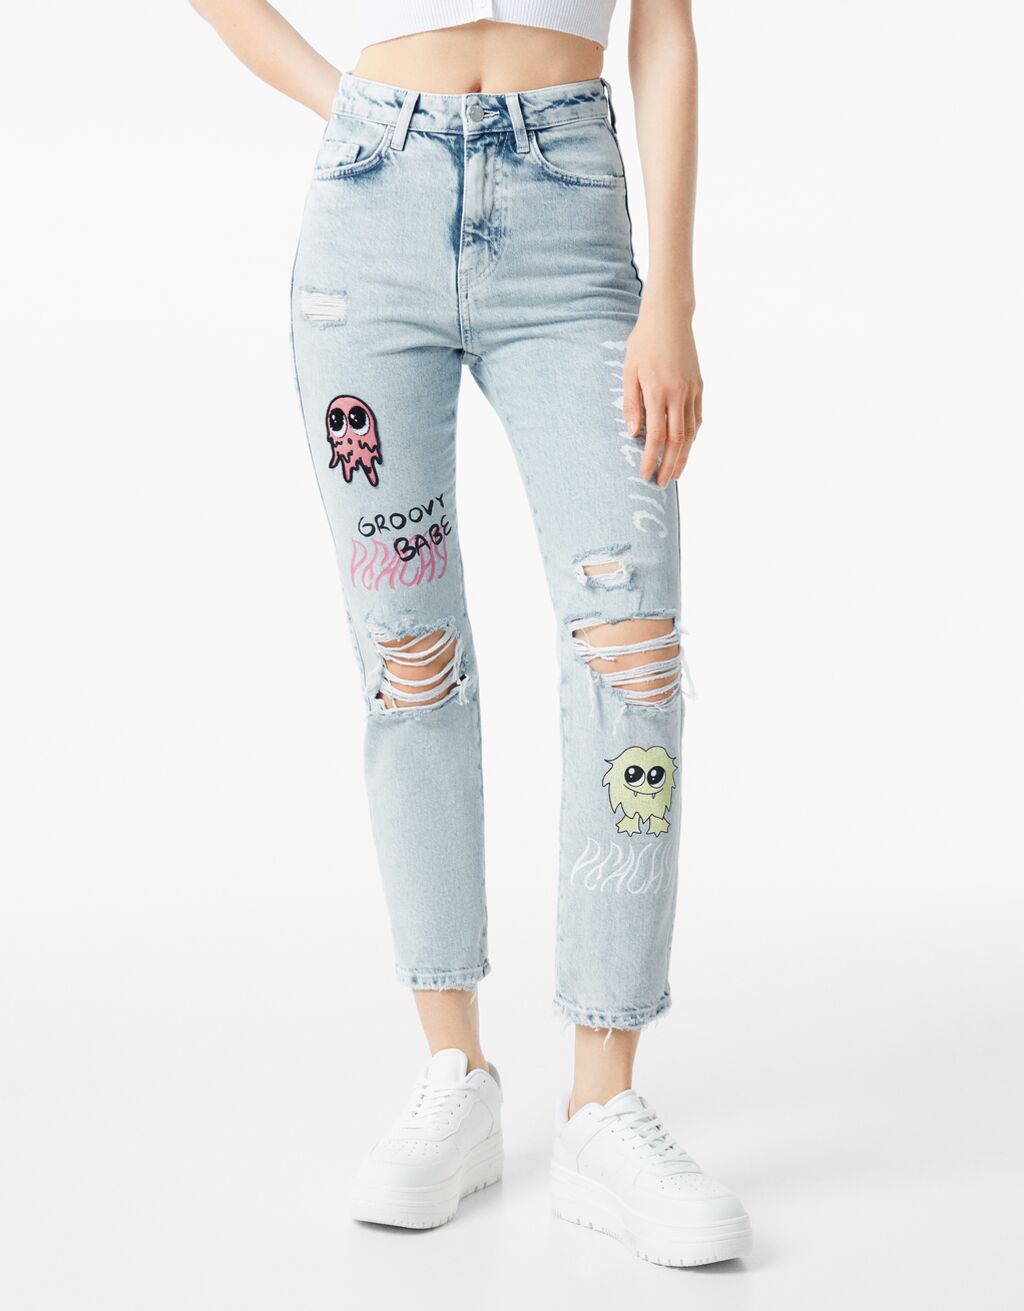 ג'ינס straight fit עם טלאים והדפס